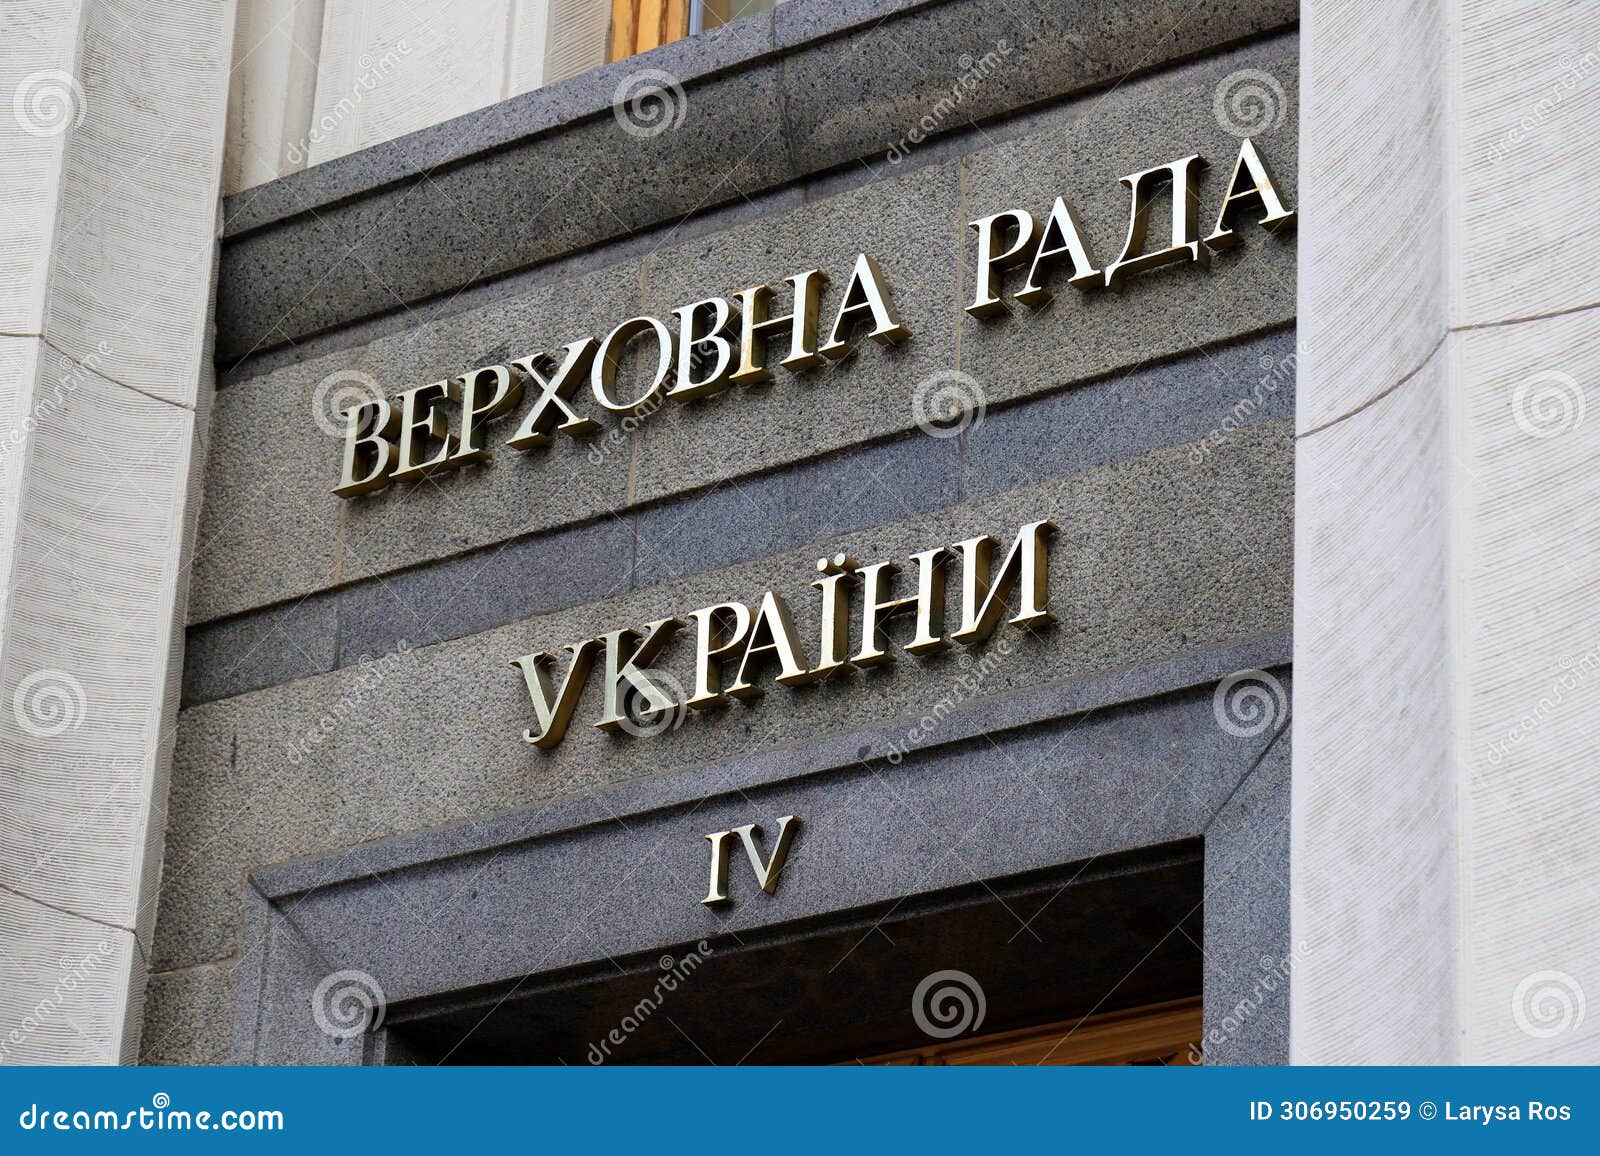 kyiv, verkhovna rada, ukrainian parliament. the inscription in ukrainian language - supreme council of ukraine in kiev